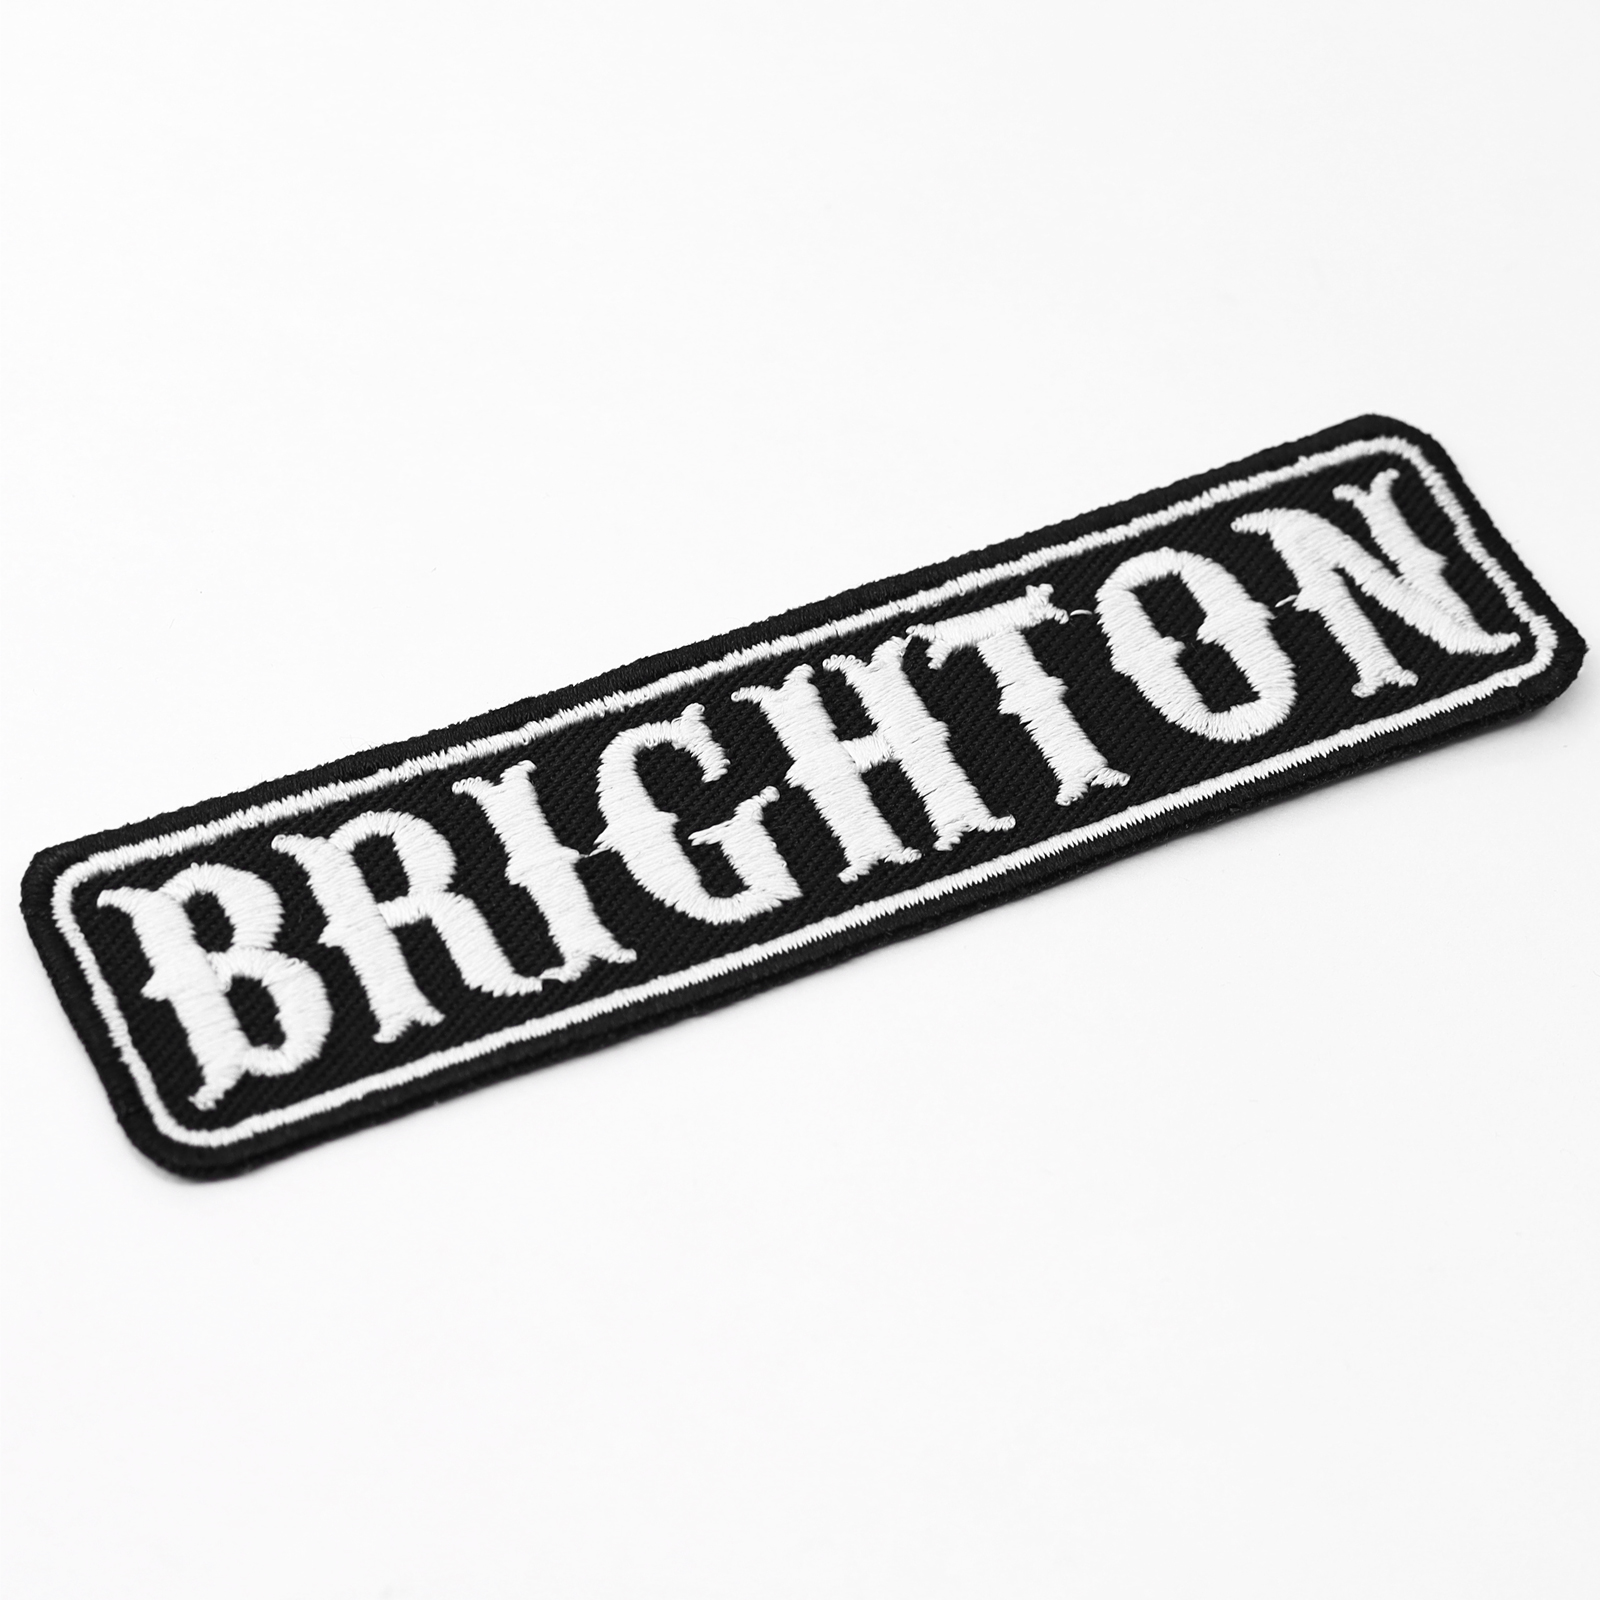 Brighton - Patch